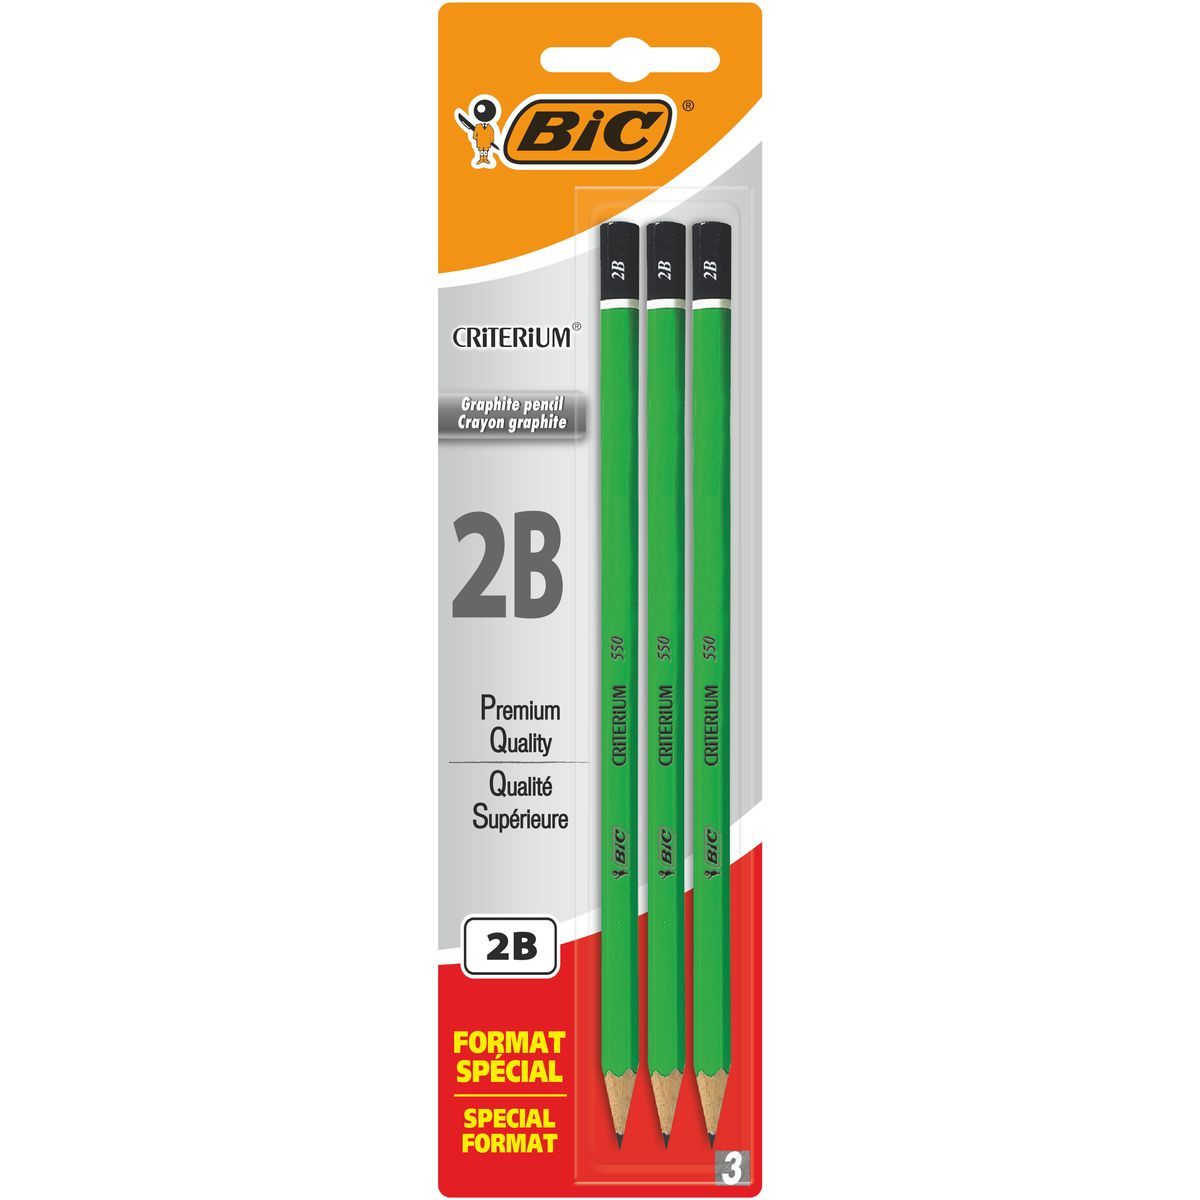 BIC Lot de 3 crayons graphite 2B Criterium 550 